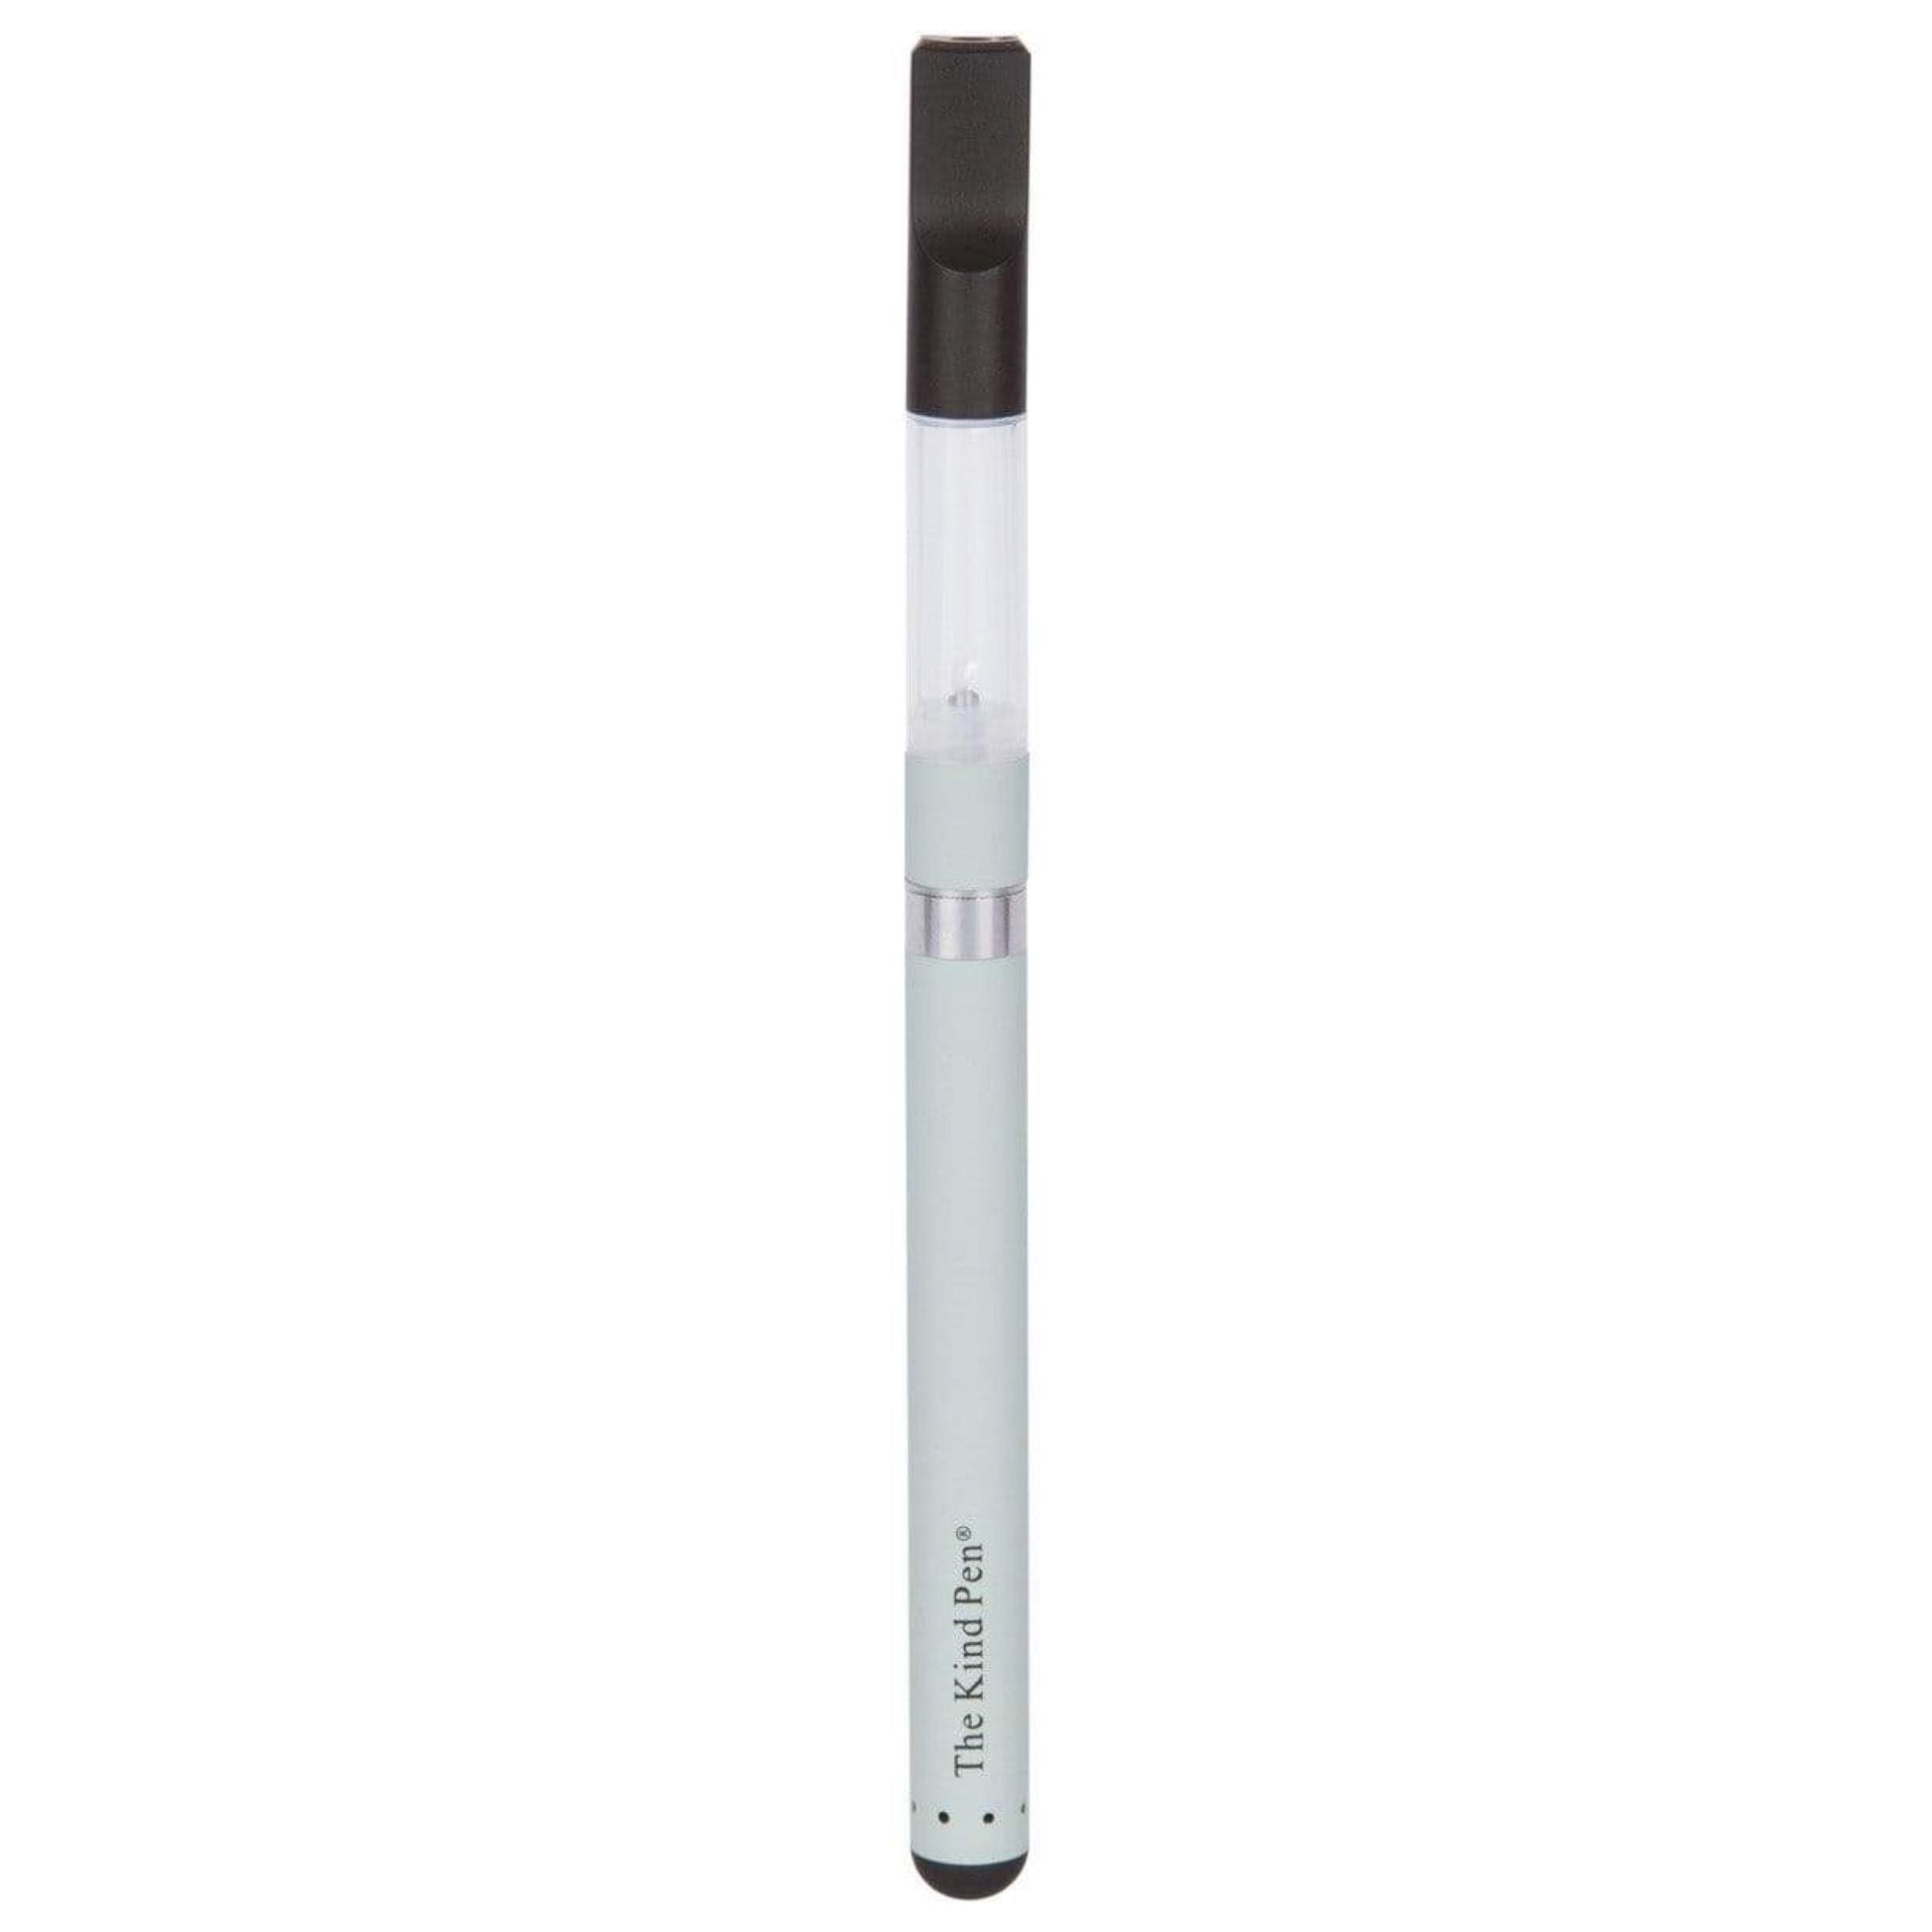 Kind Pen Slim Oil Vaporizer Pen